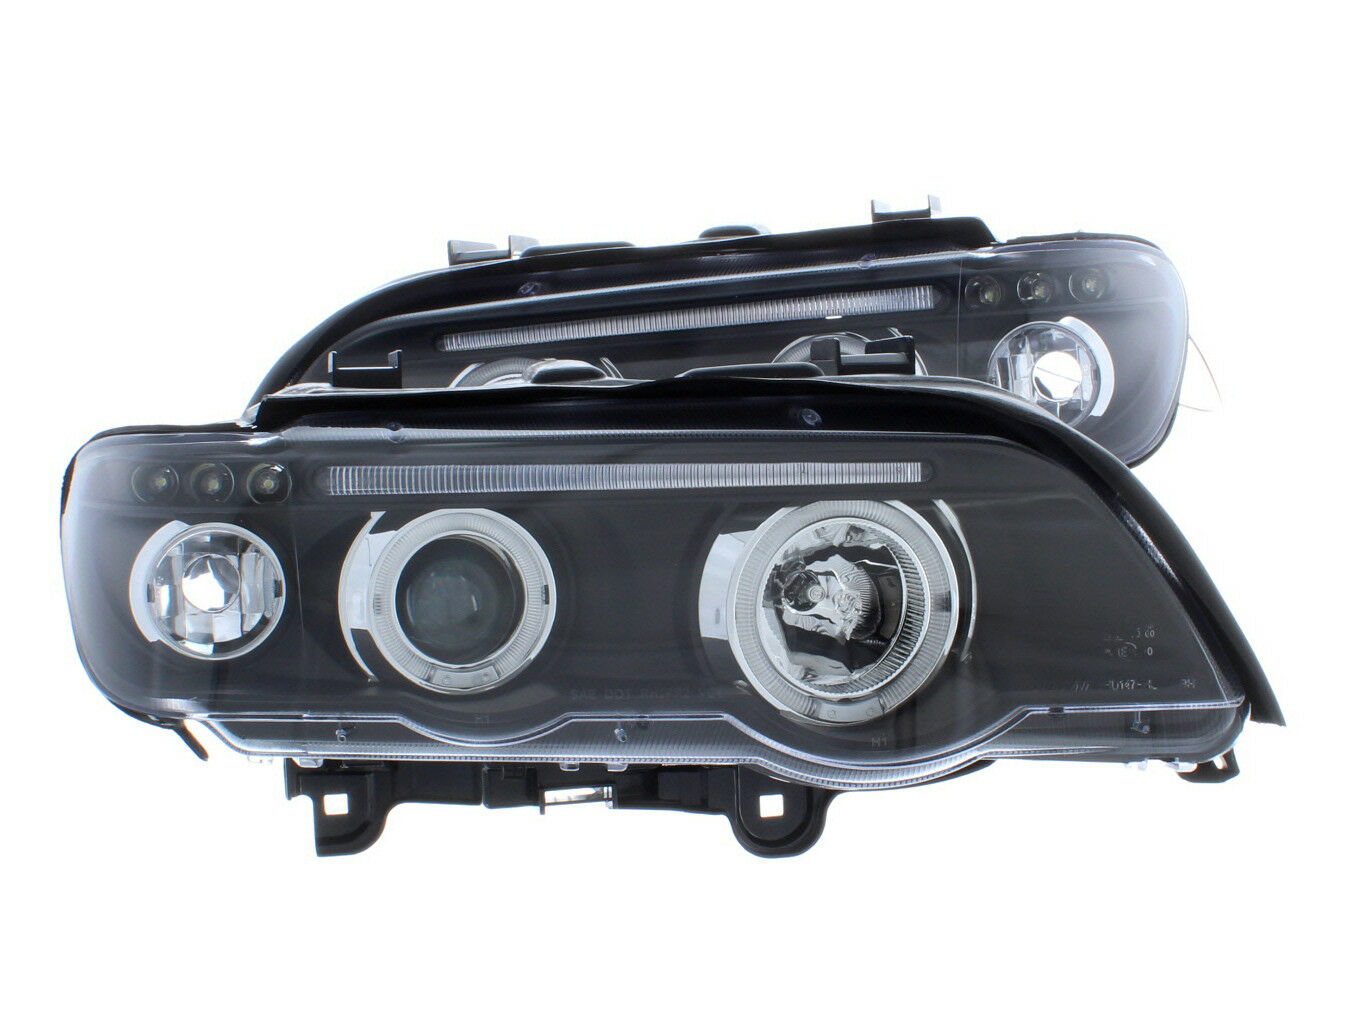 BMW X5 E53 headlight repair & upgrade kits HID xenon LED